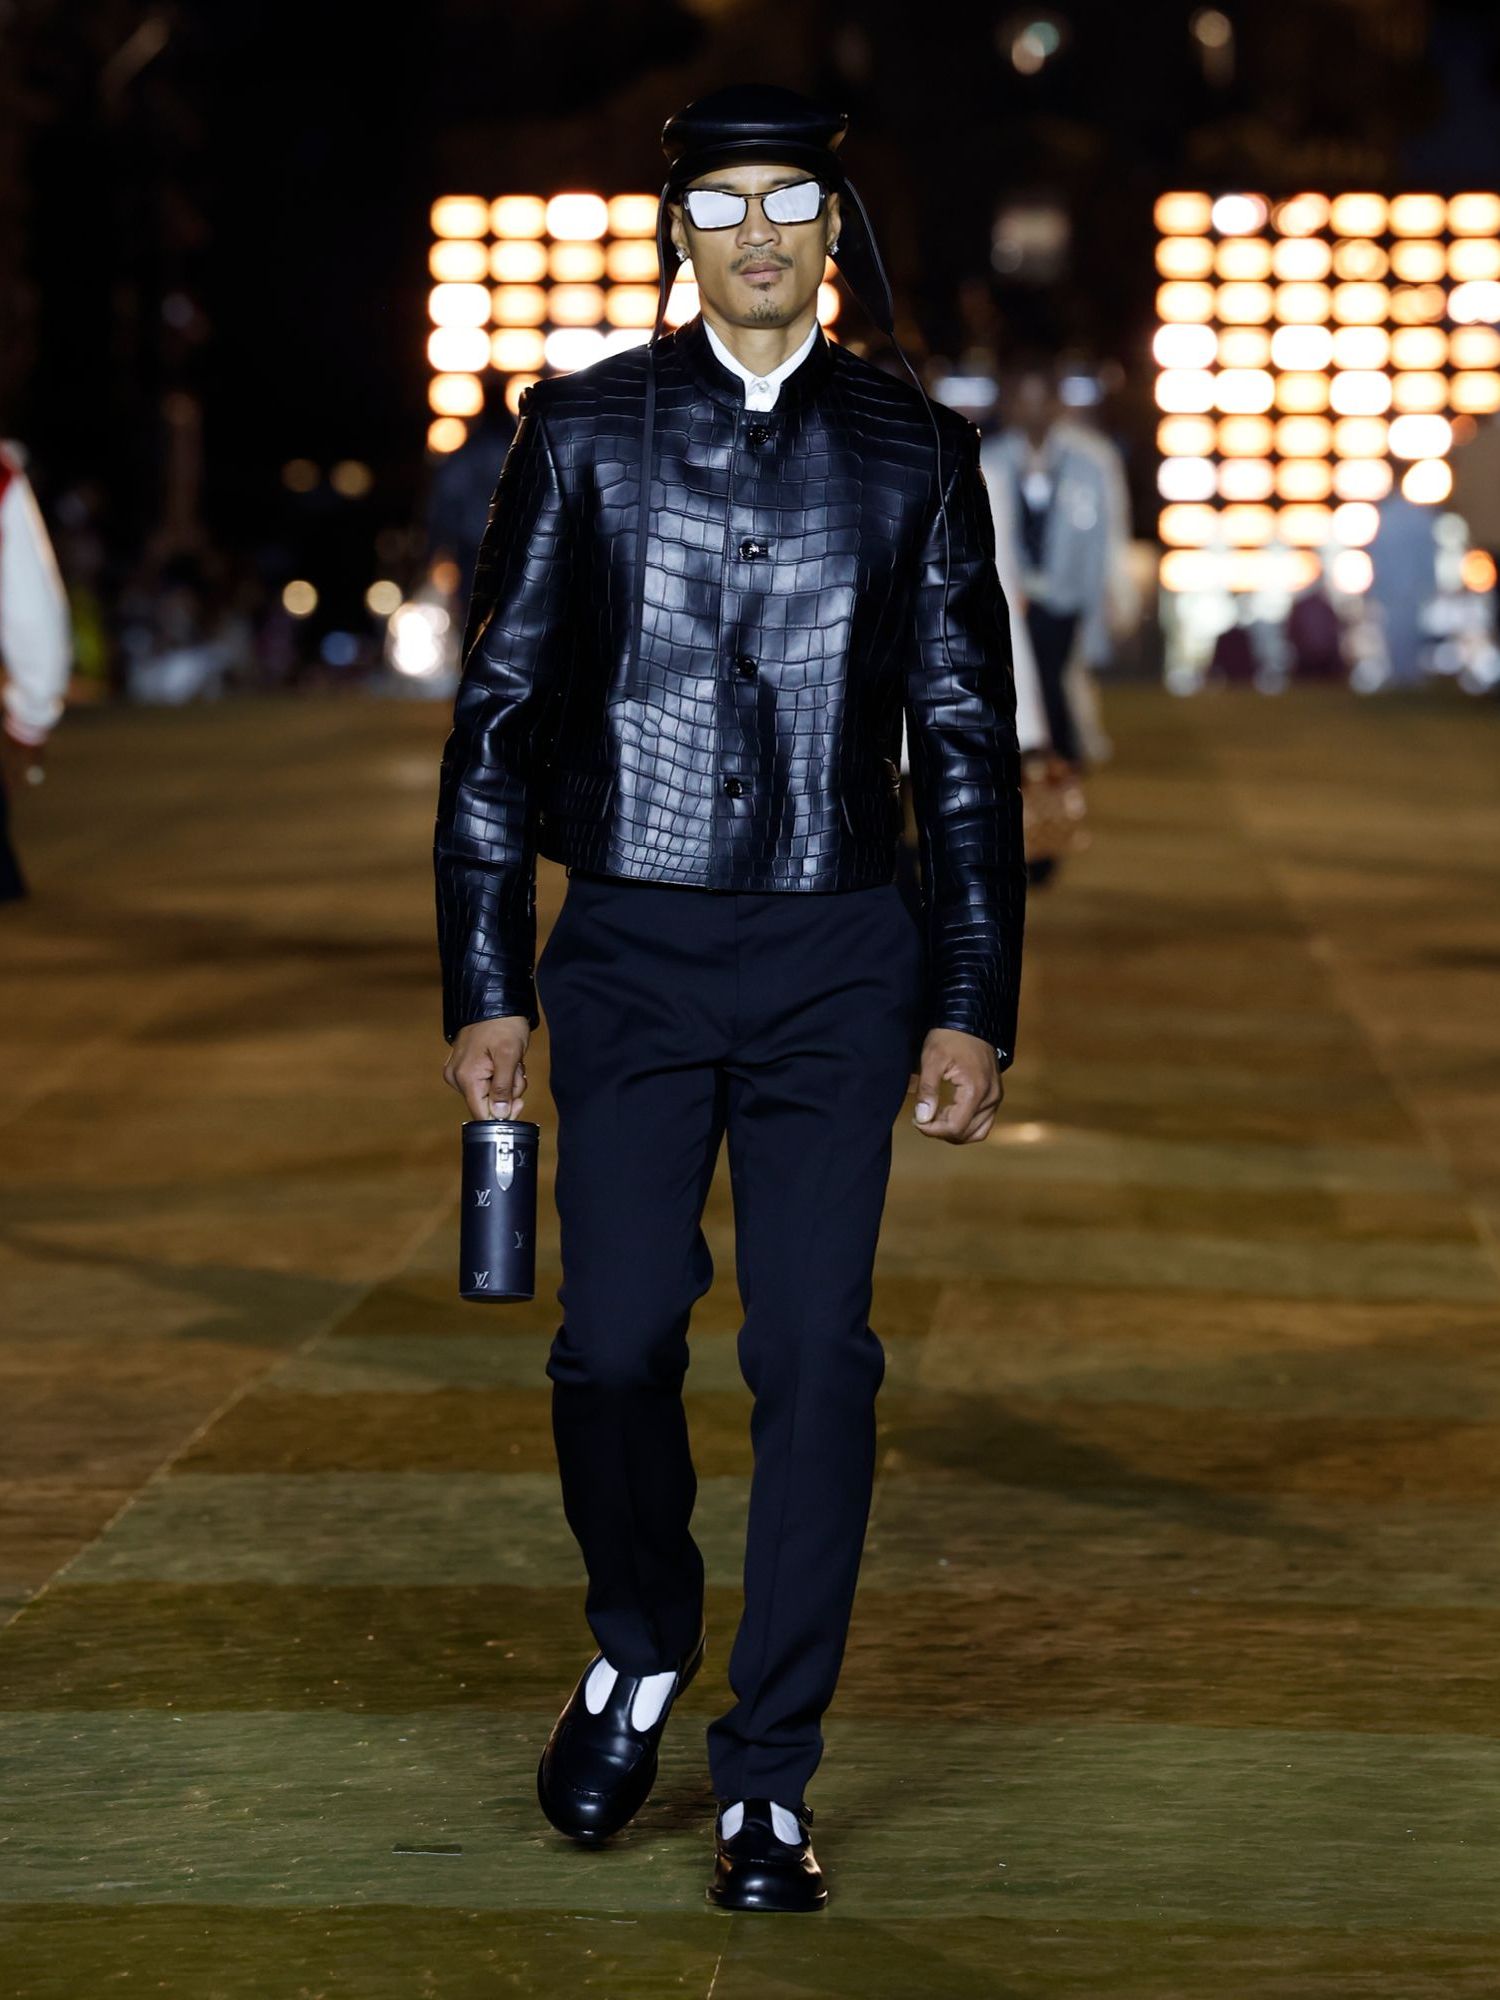 Louis Vuitton Men's Damier Jacket